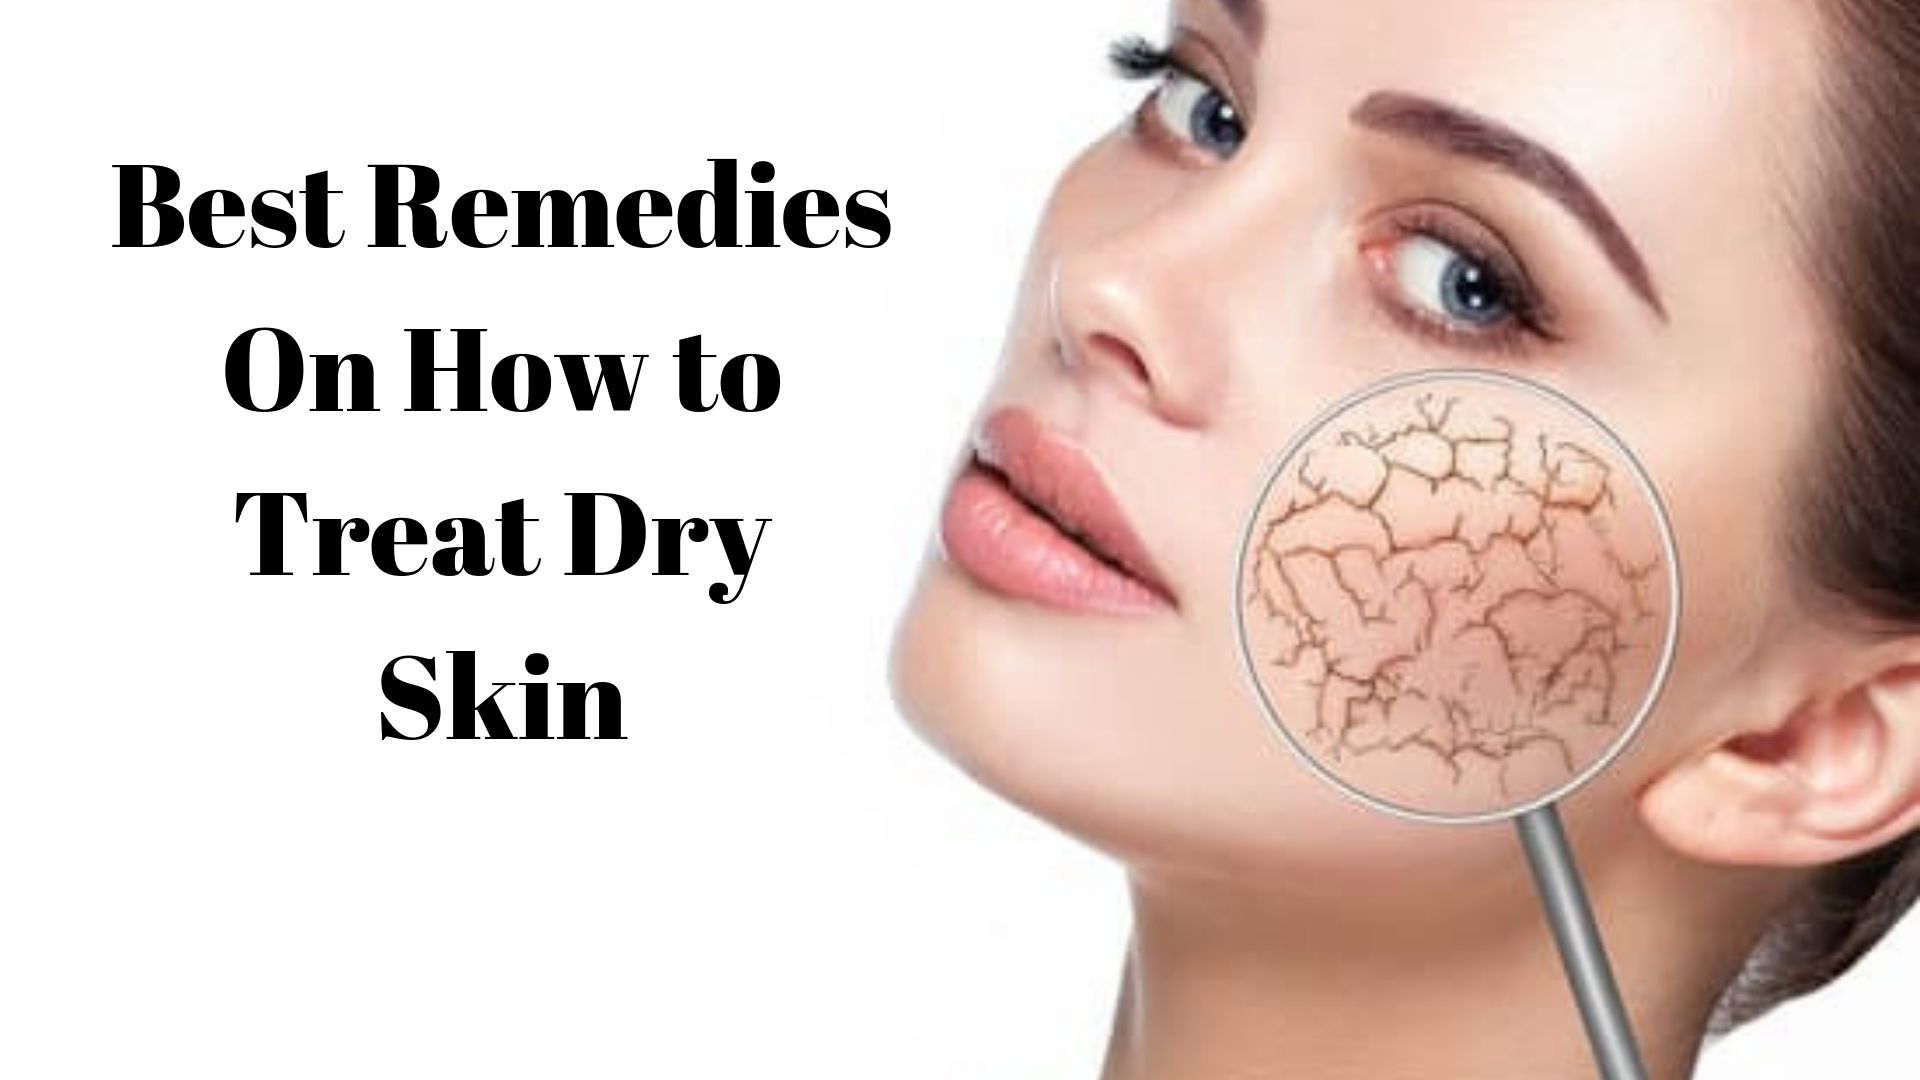 Skin lightening treatment. Dry skin